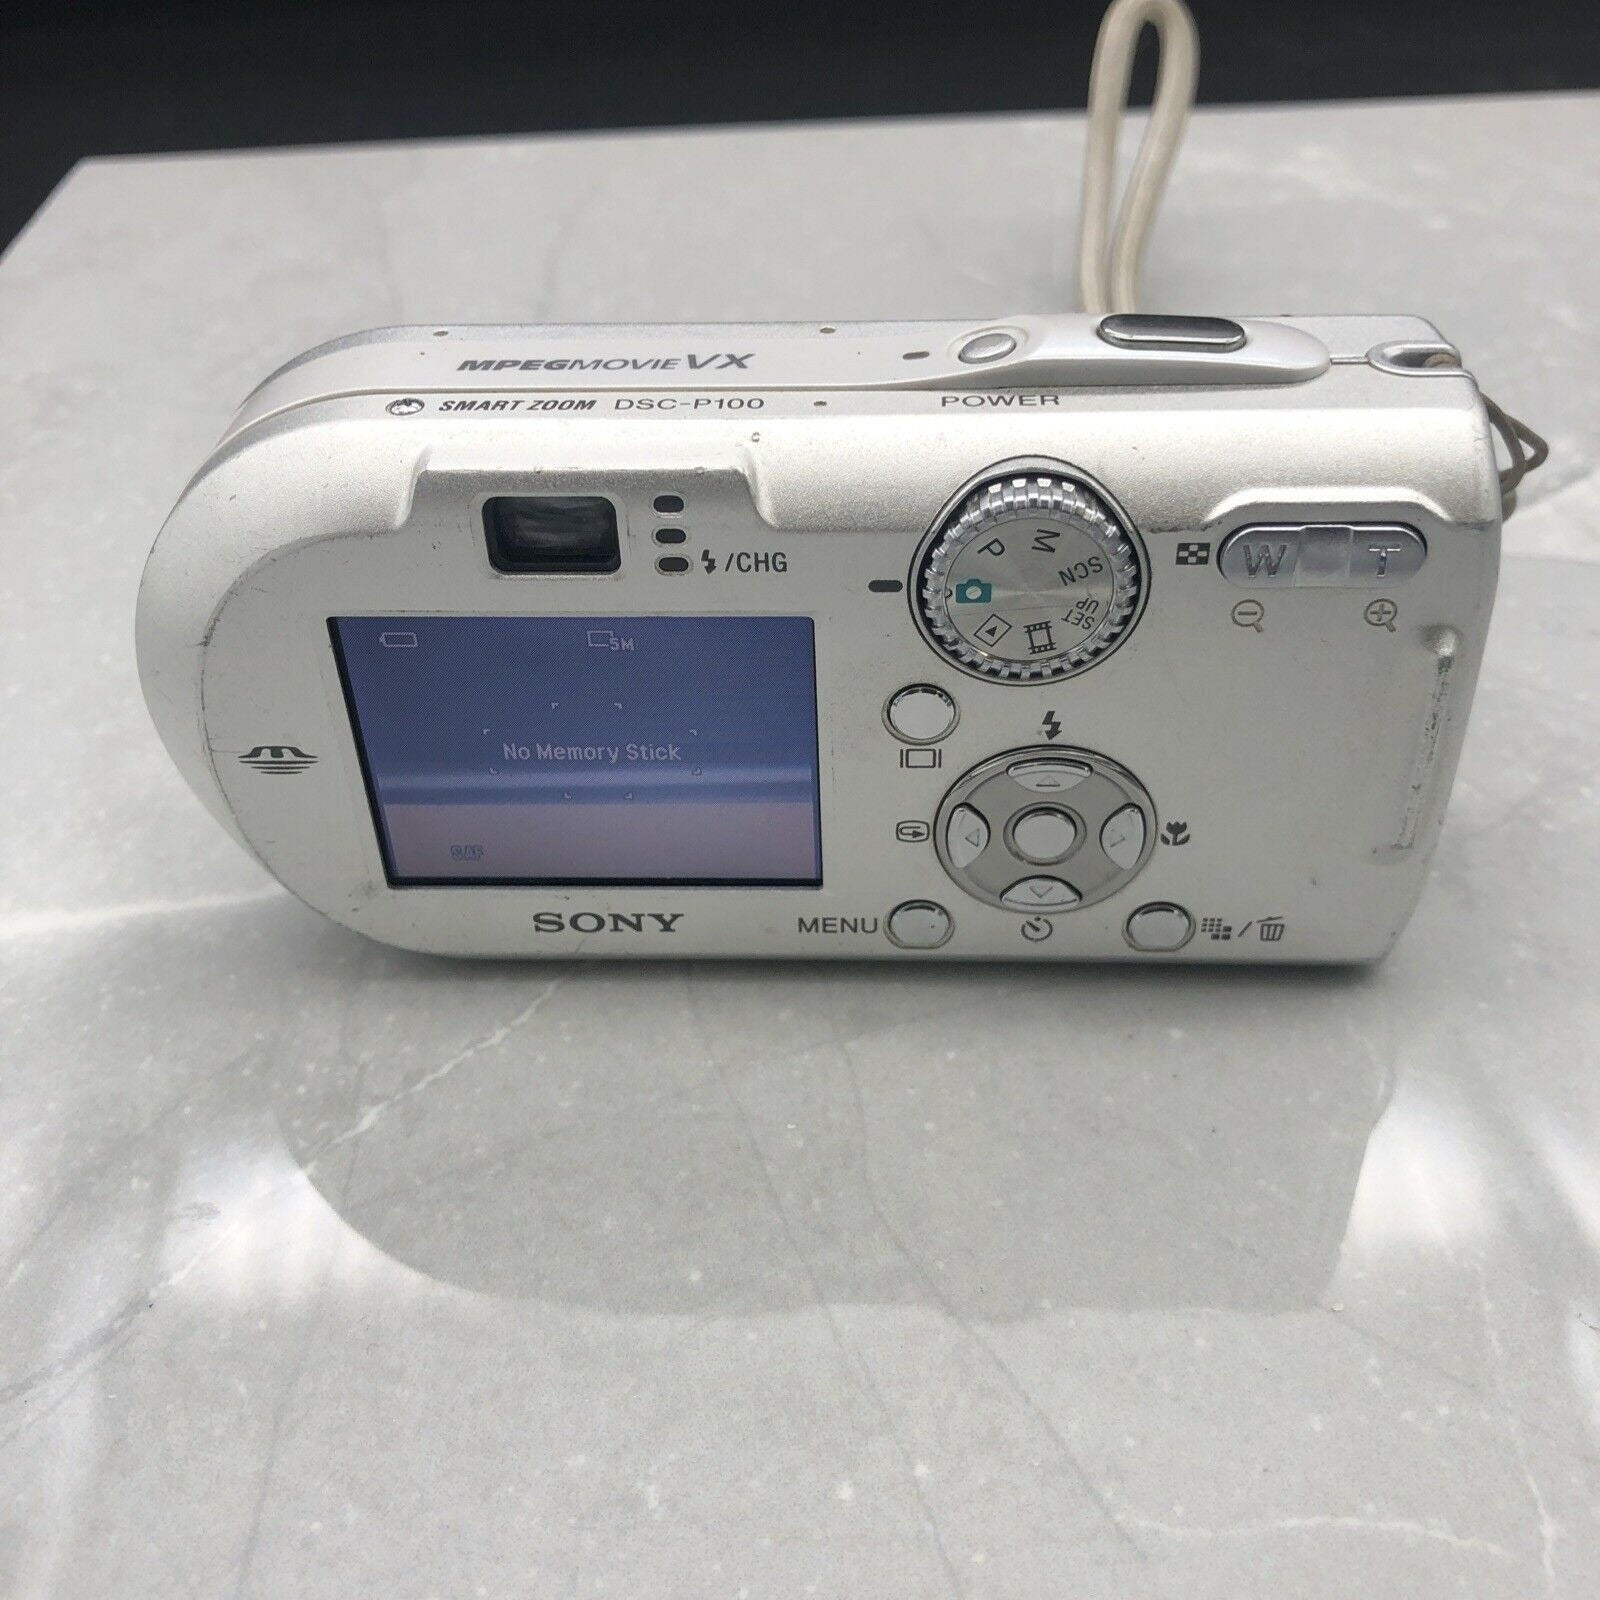 Sony Cyber-shot DSC-P100 5.1MP Digital Camera